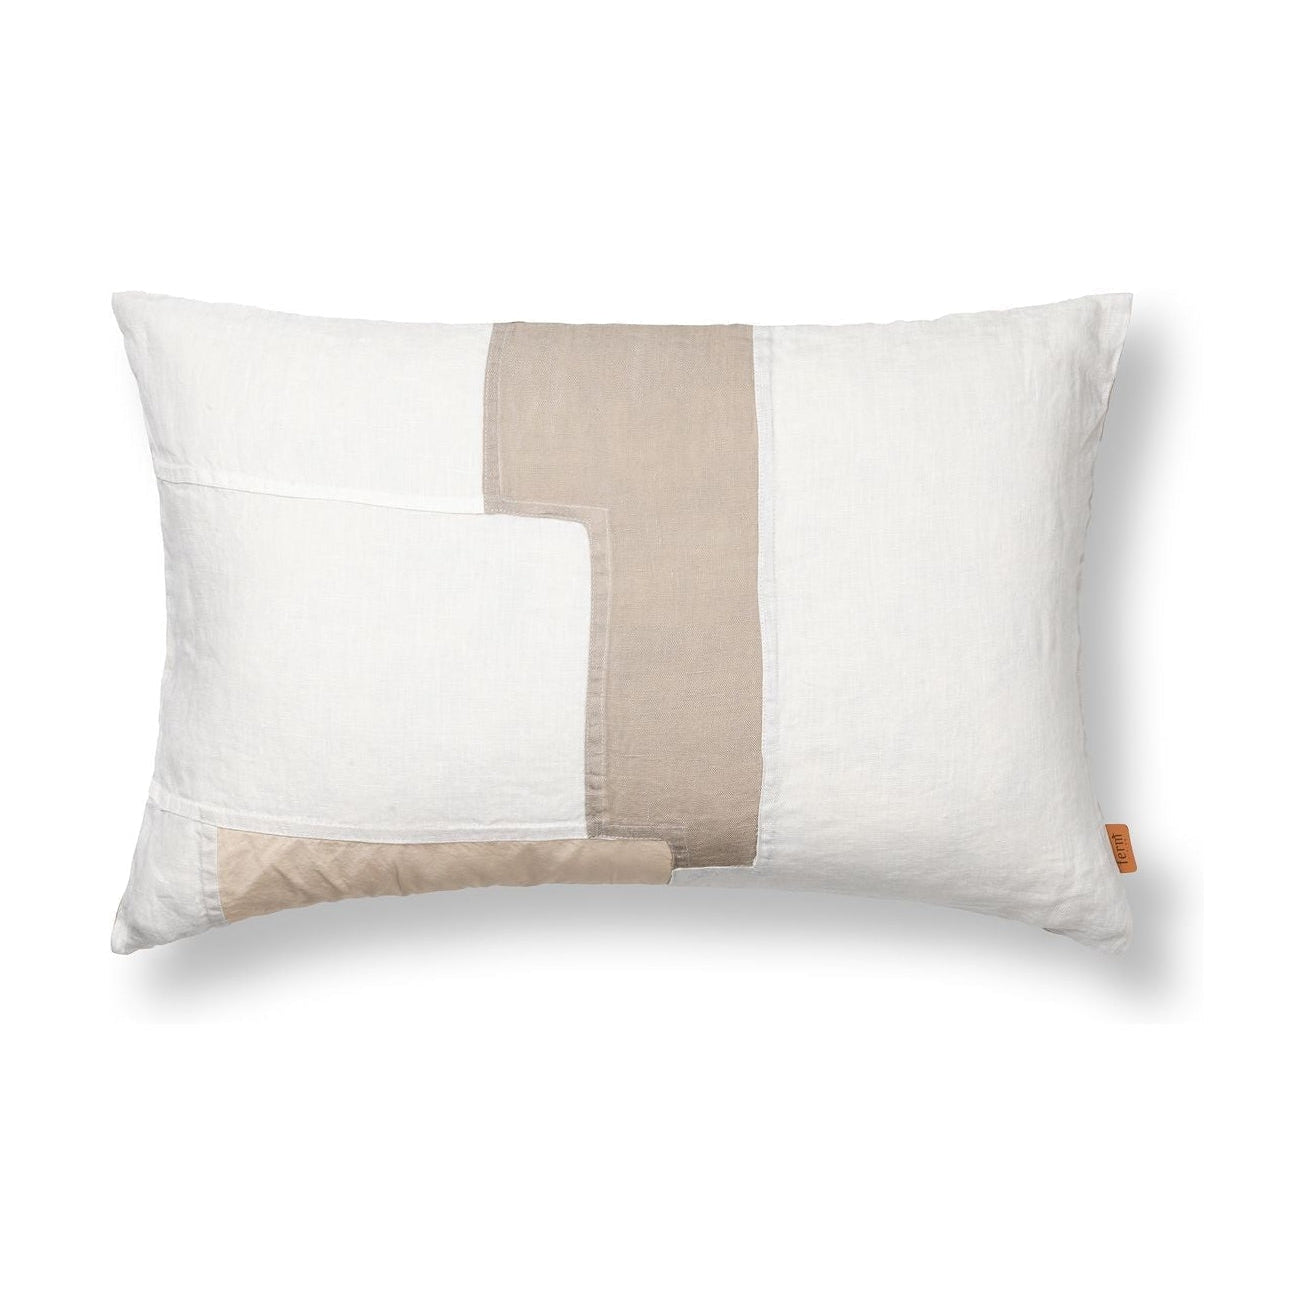 Ferm Living Part Cushion Rectangular, Off White